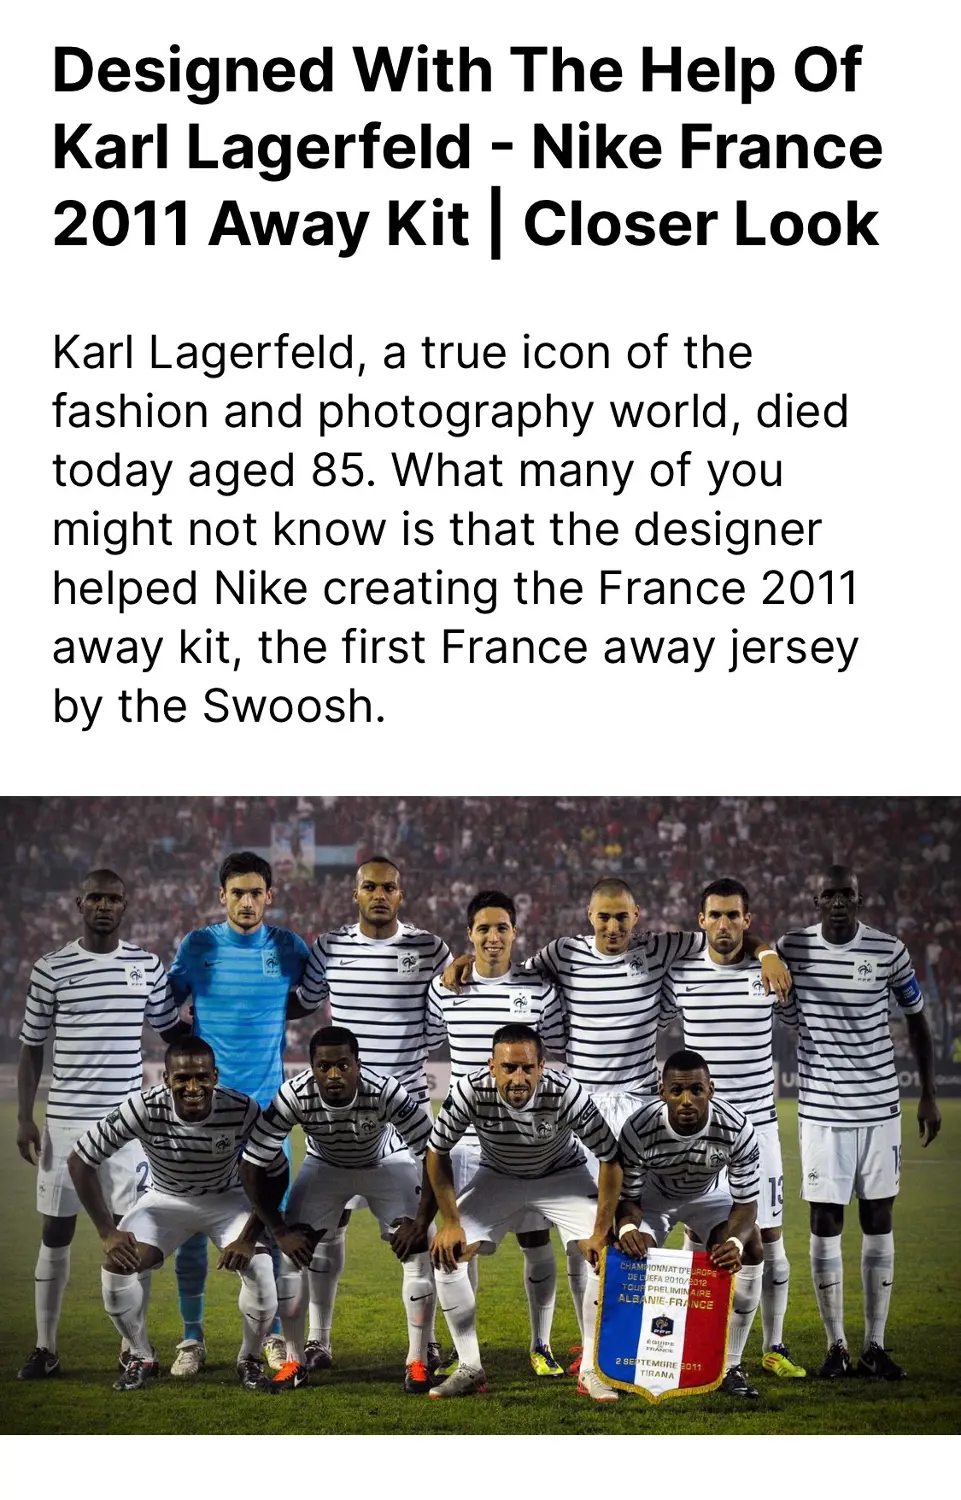 Nike fodboldtrøje